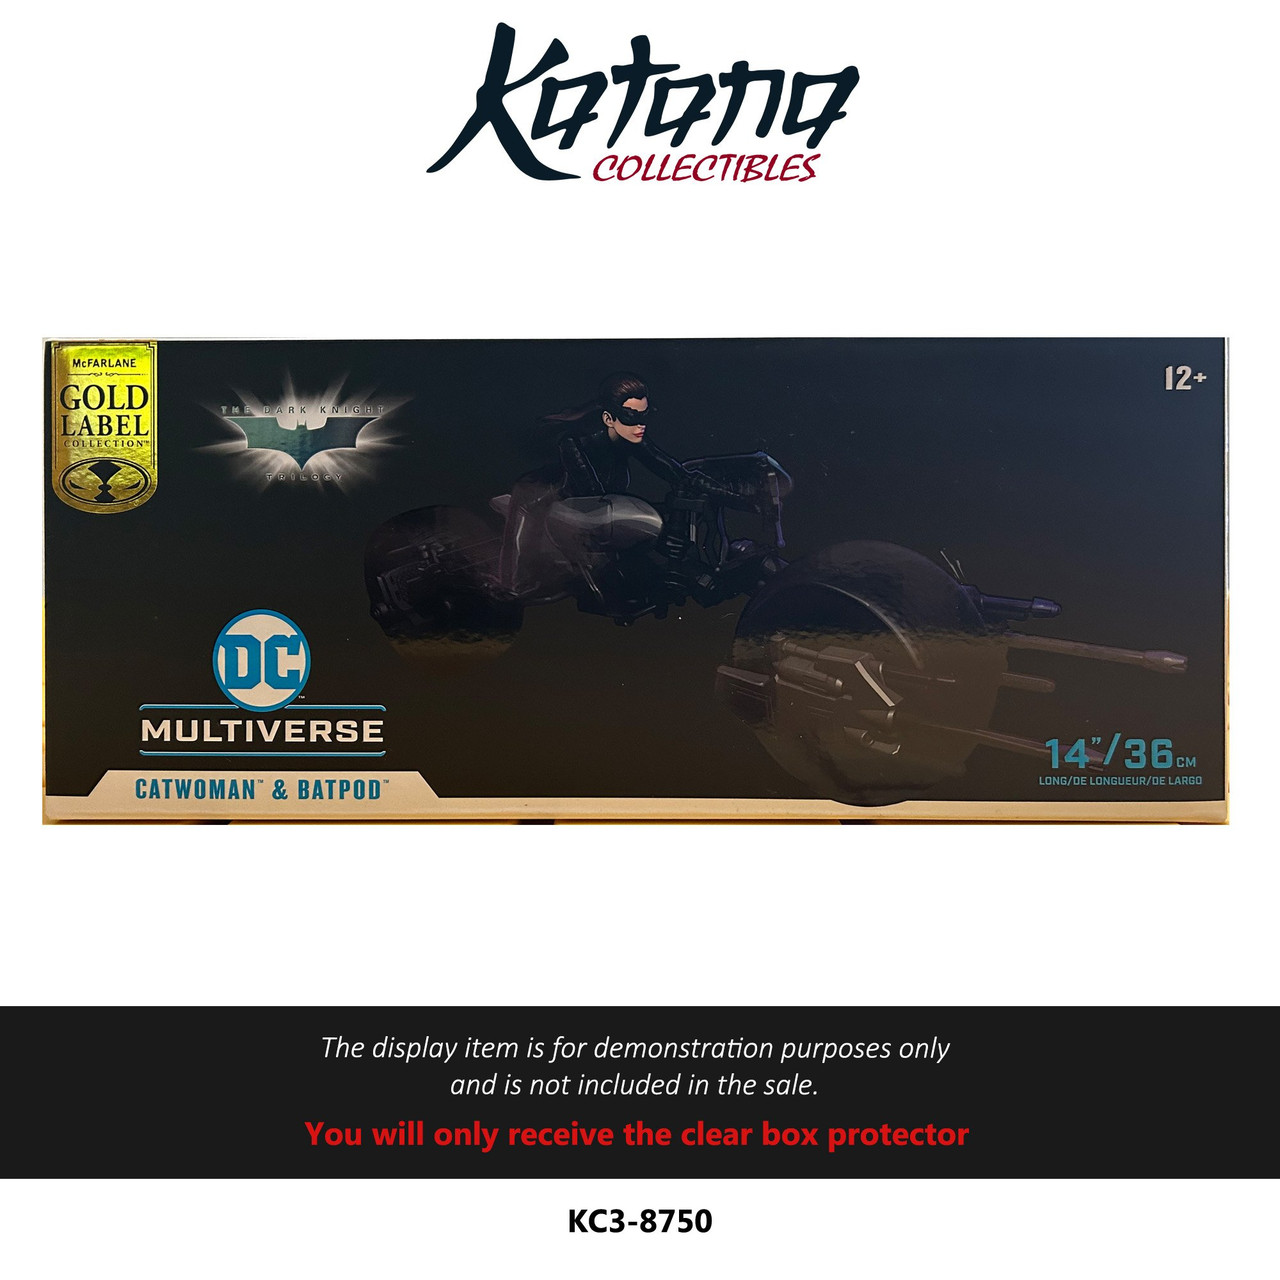 Katana Collectibles Protector For Mcfarlane Catwoman & Batpod